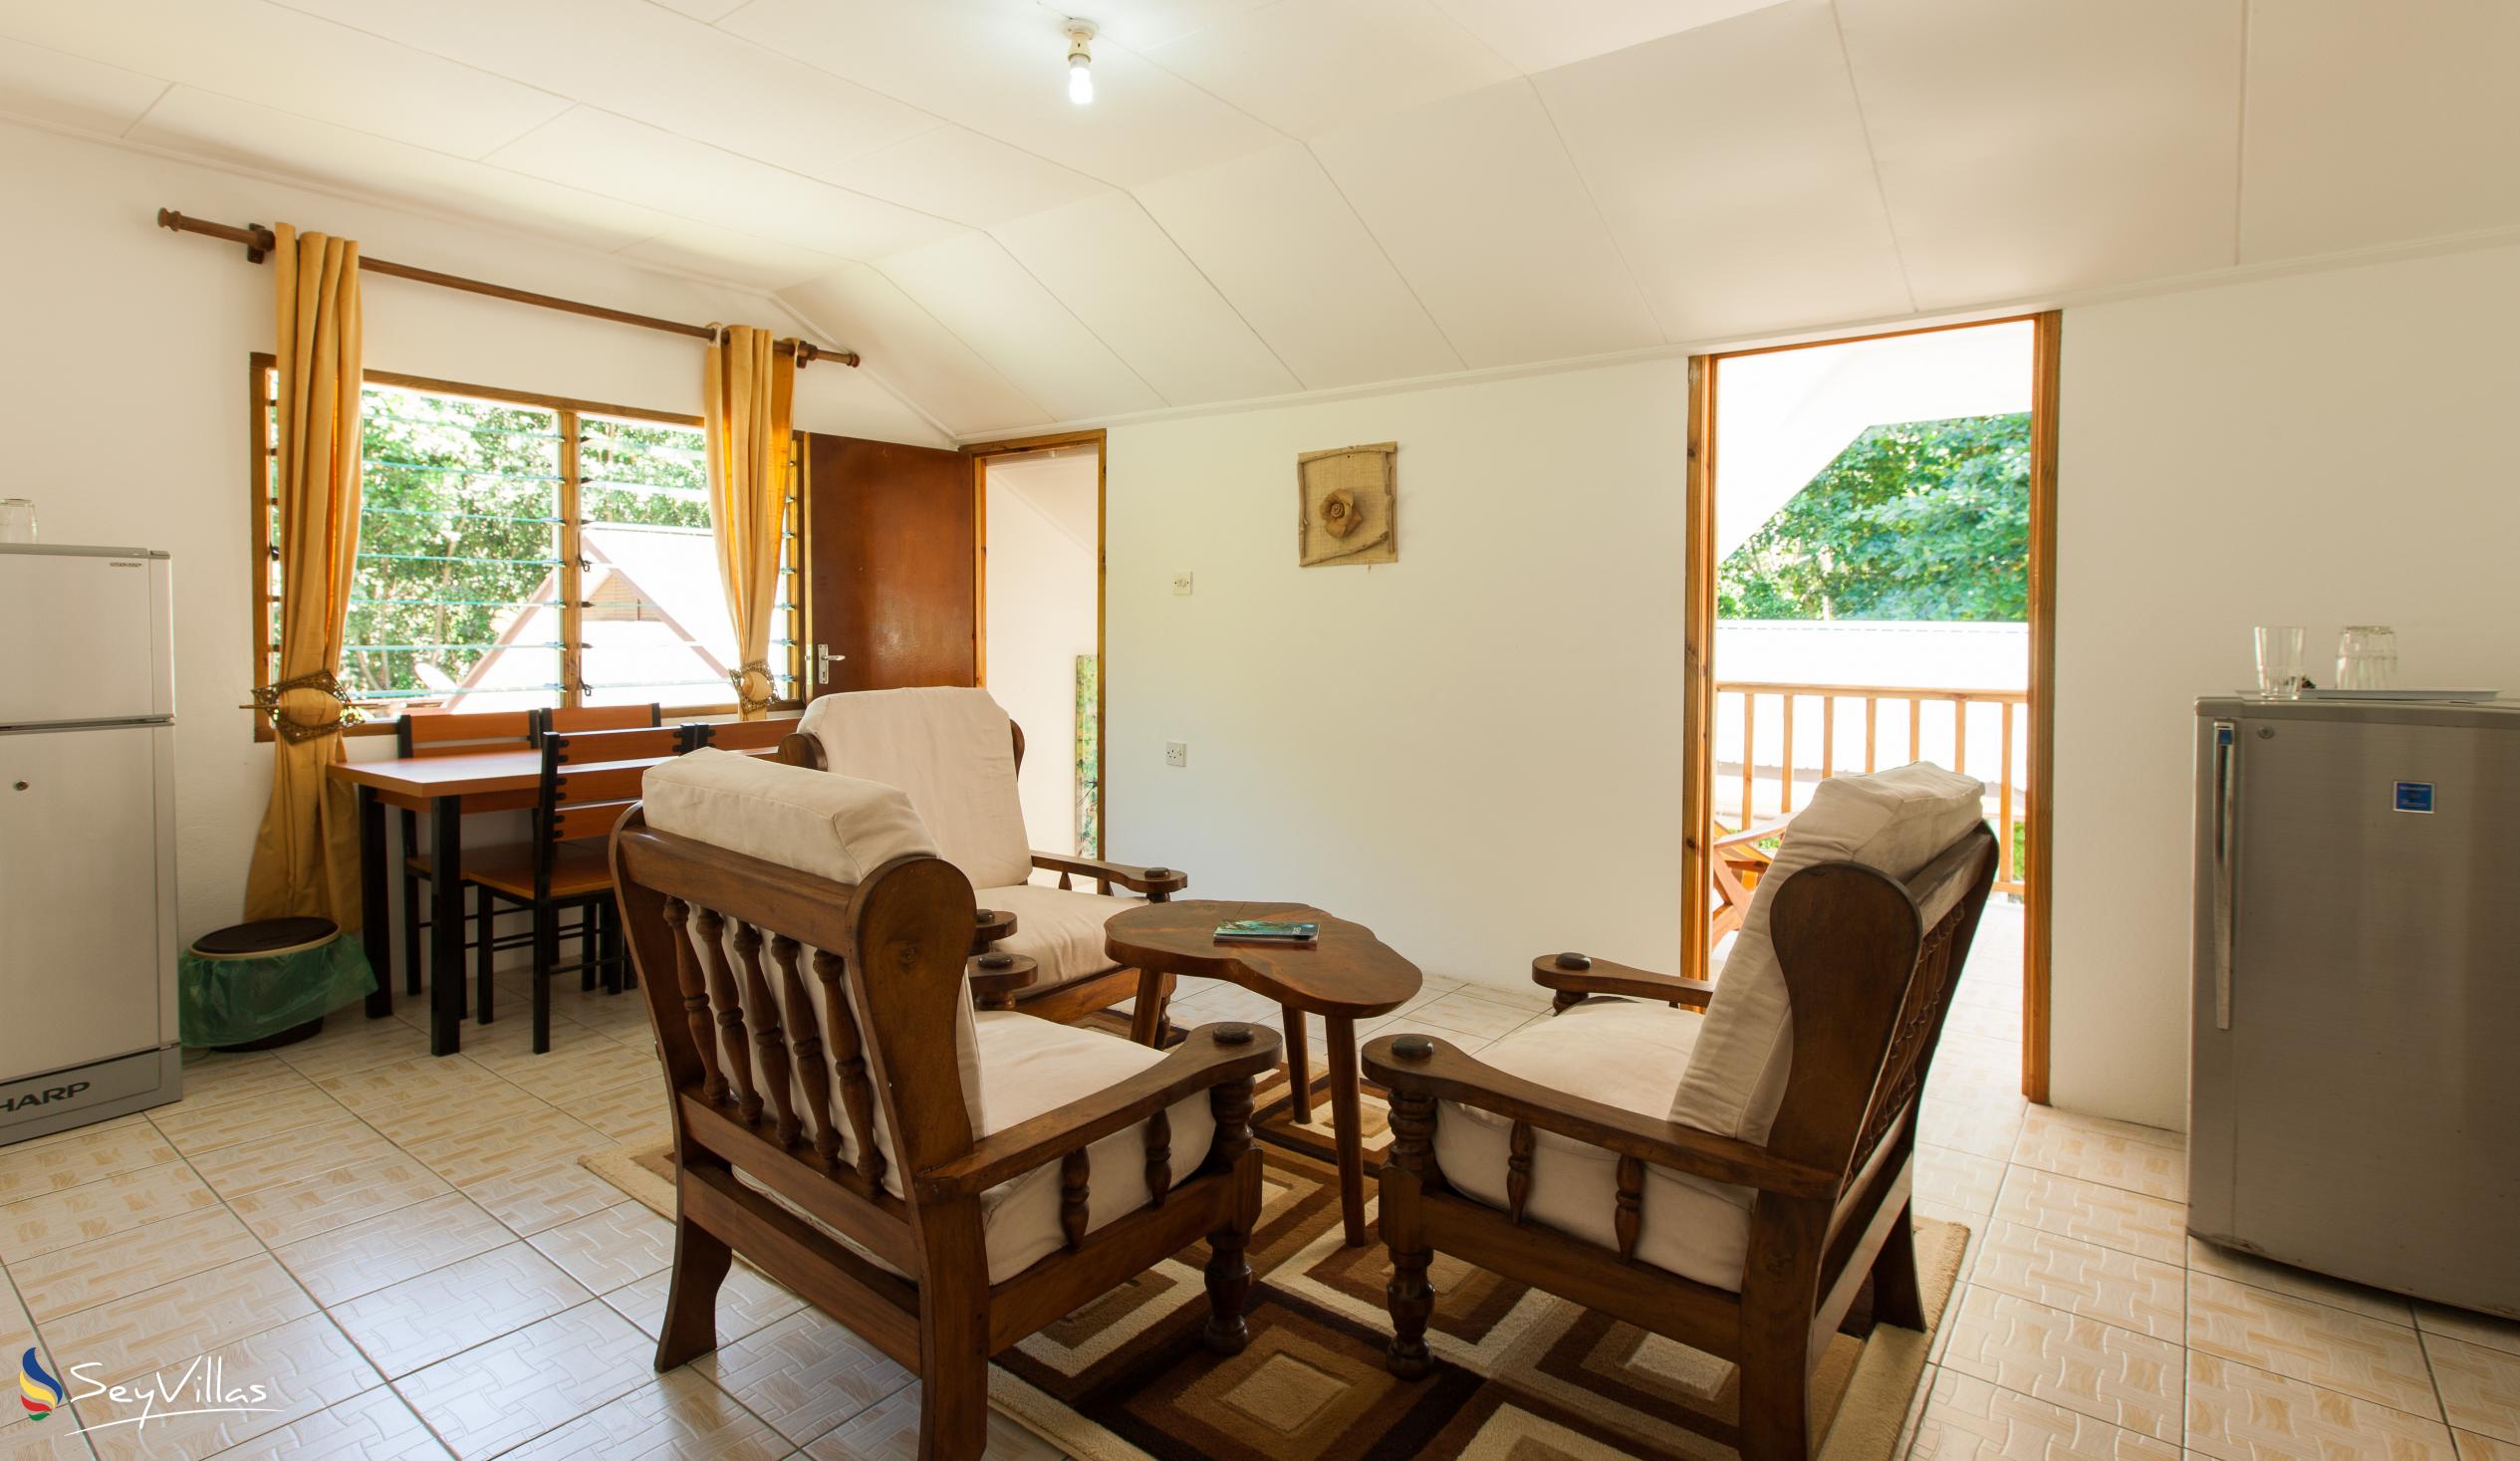 Photo 45: Tannette's Villa - Indoor area - La Digue (Seychelles)